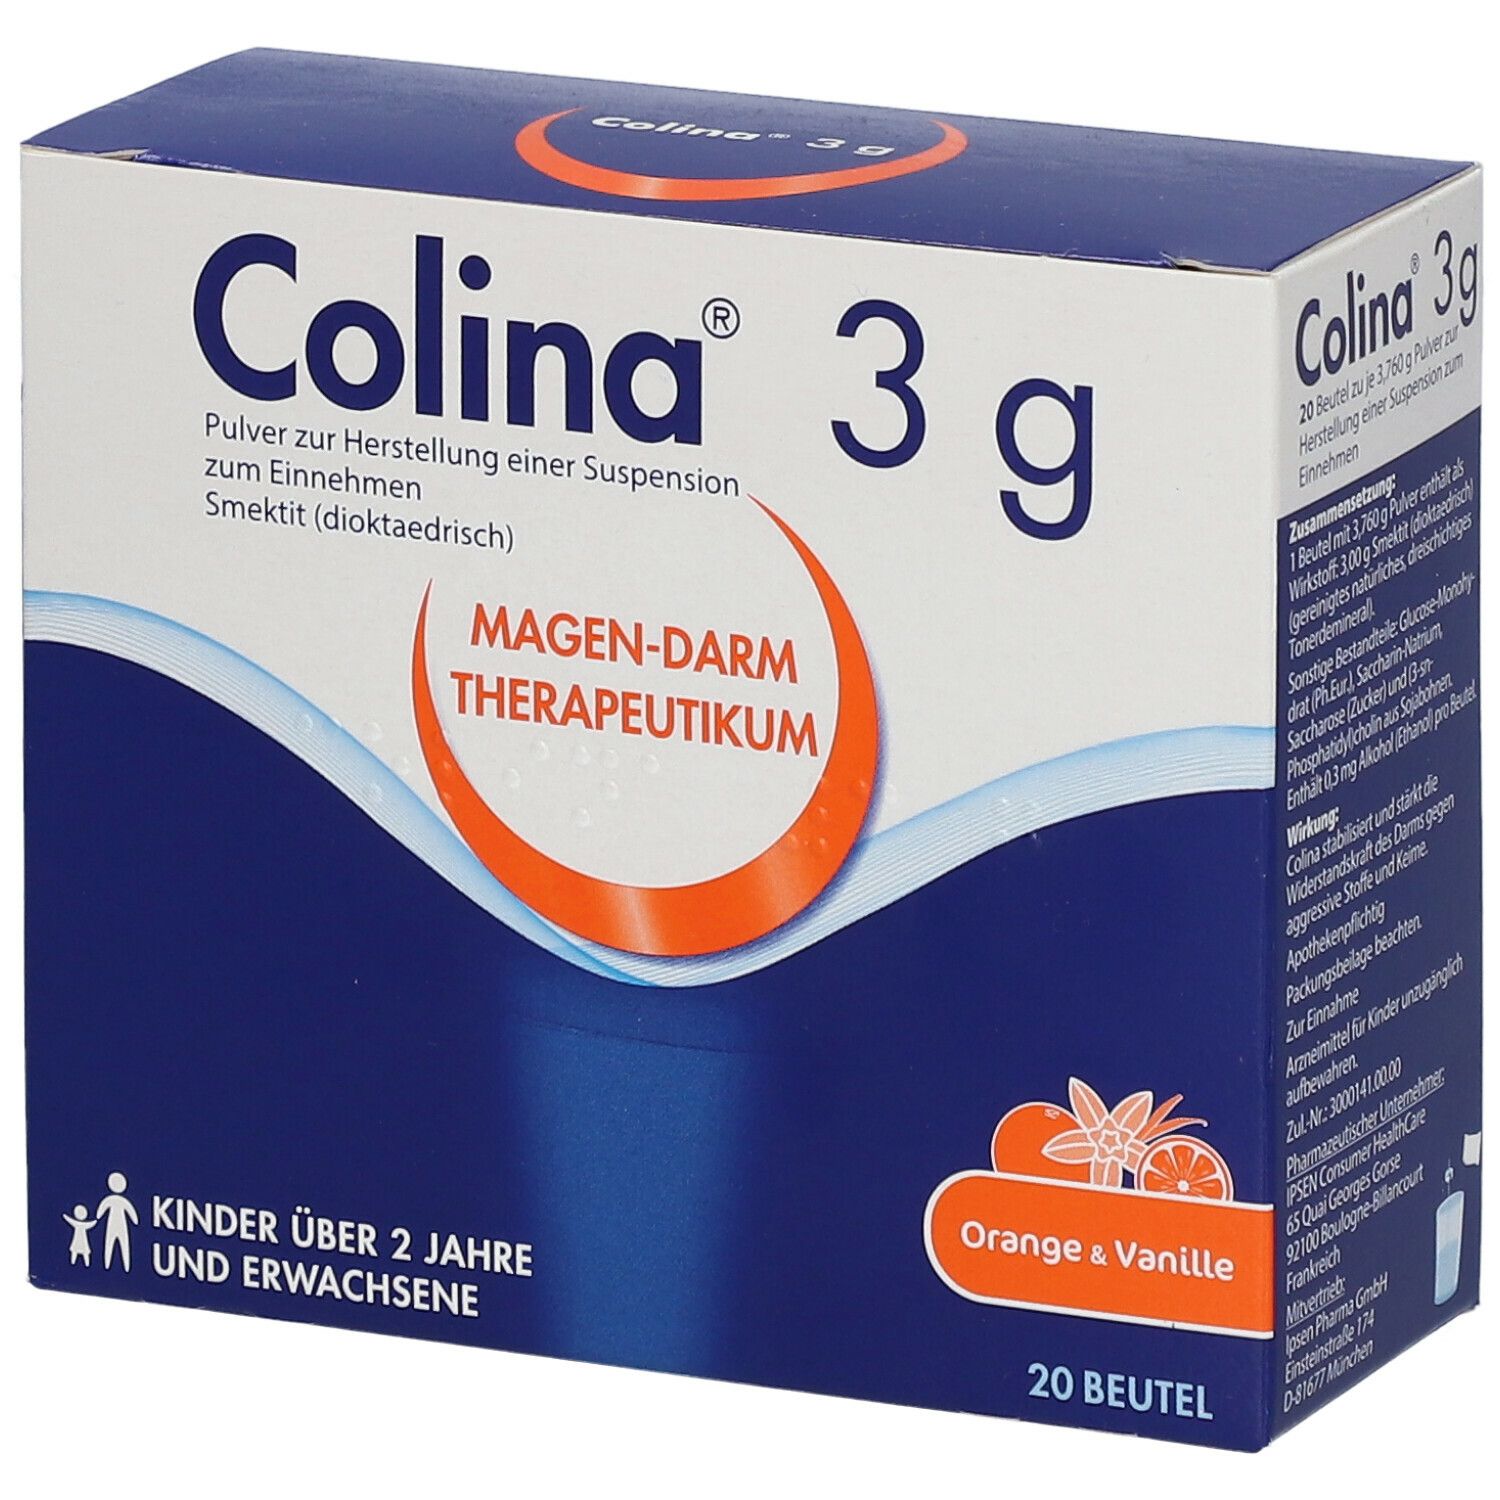 Colina® 3g